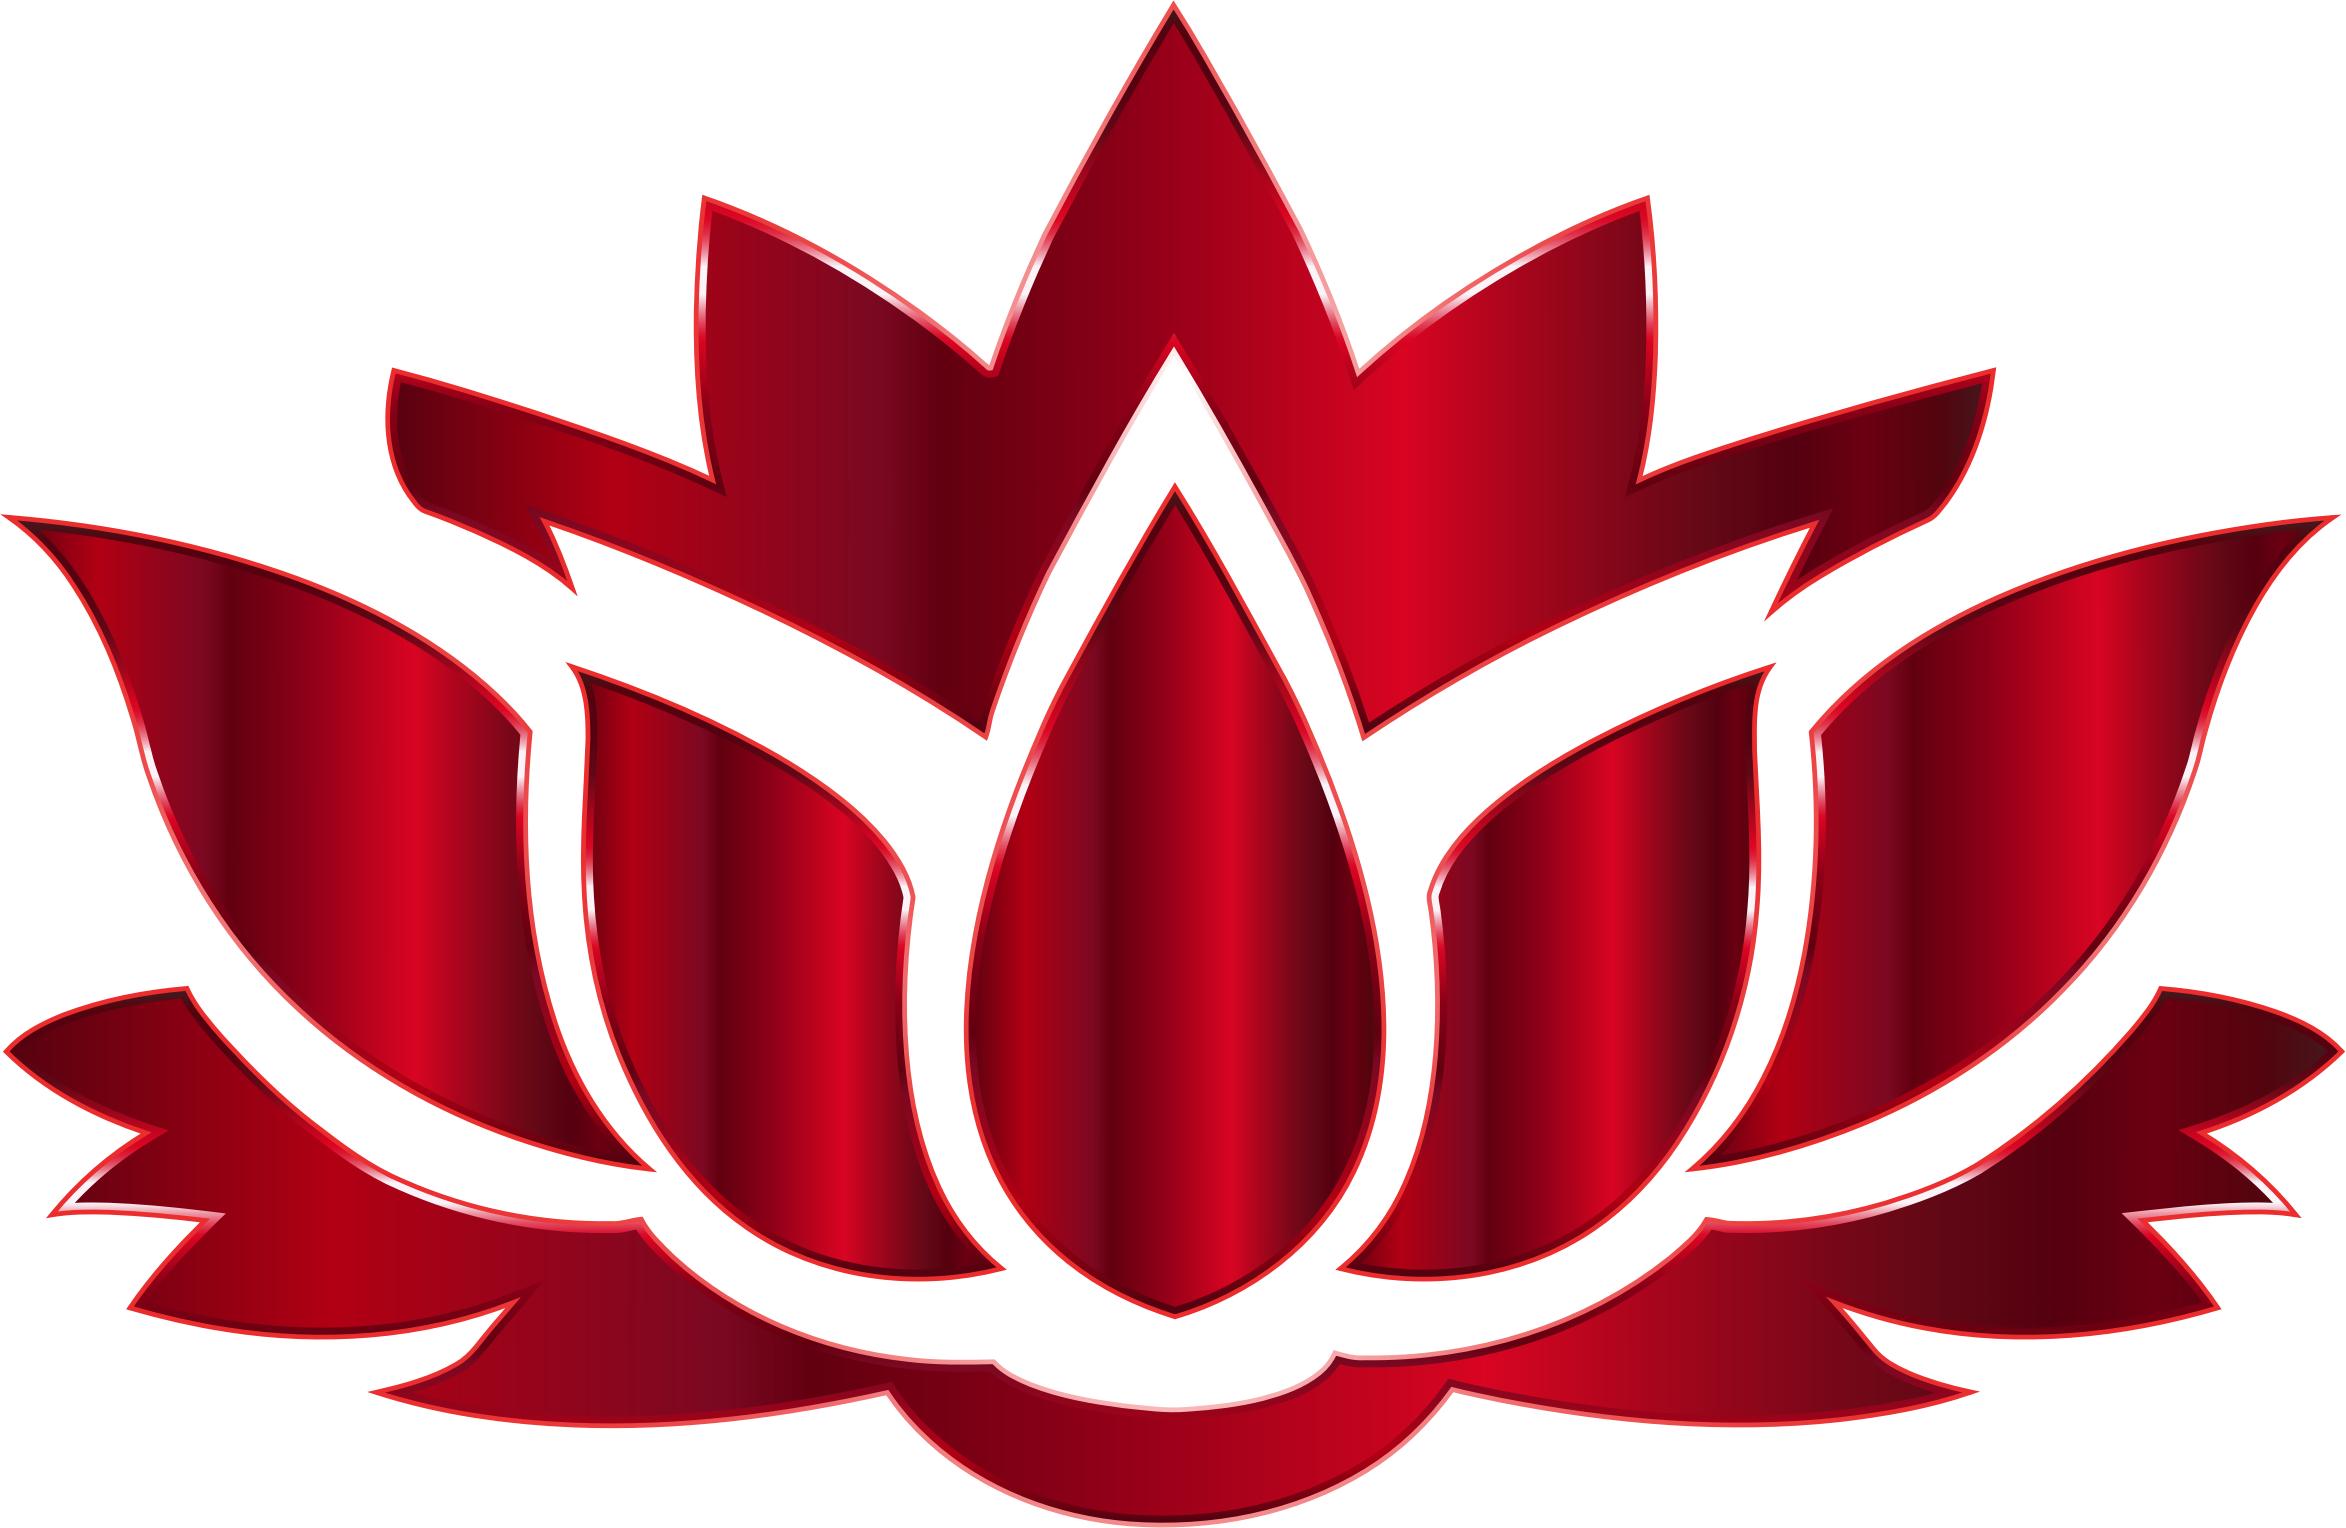 Vermillion Lotus Flower Silhouette No Background png